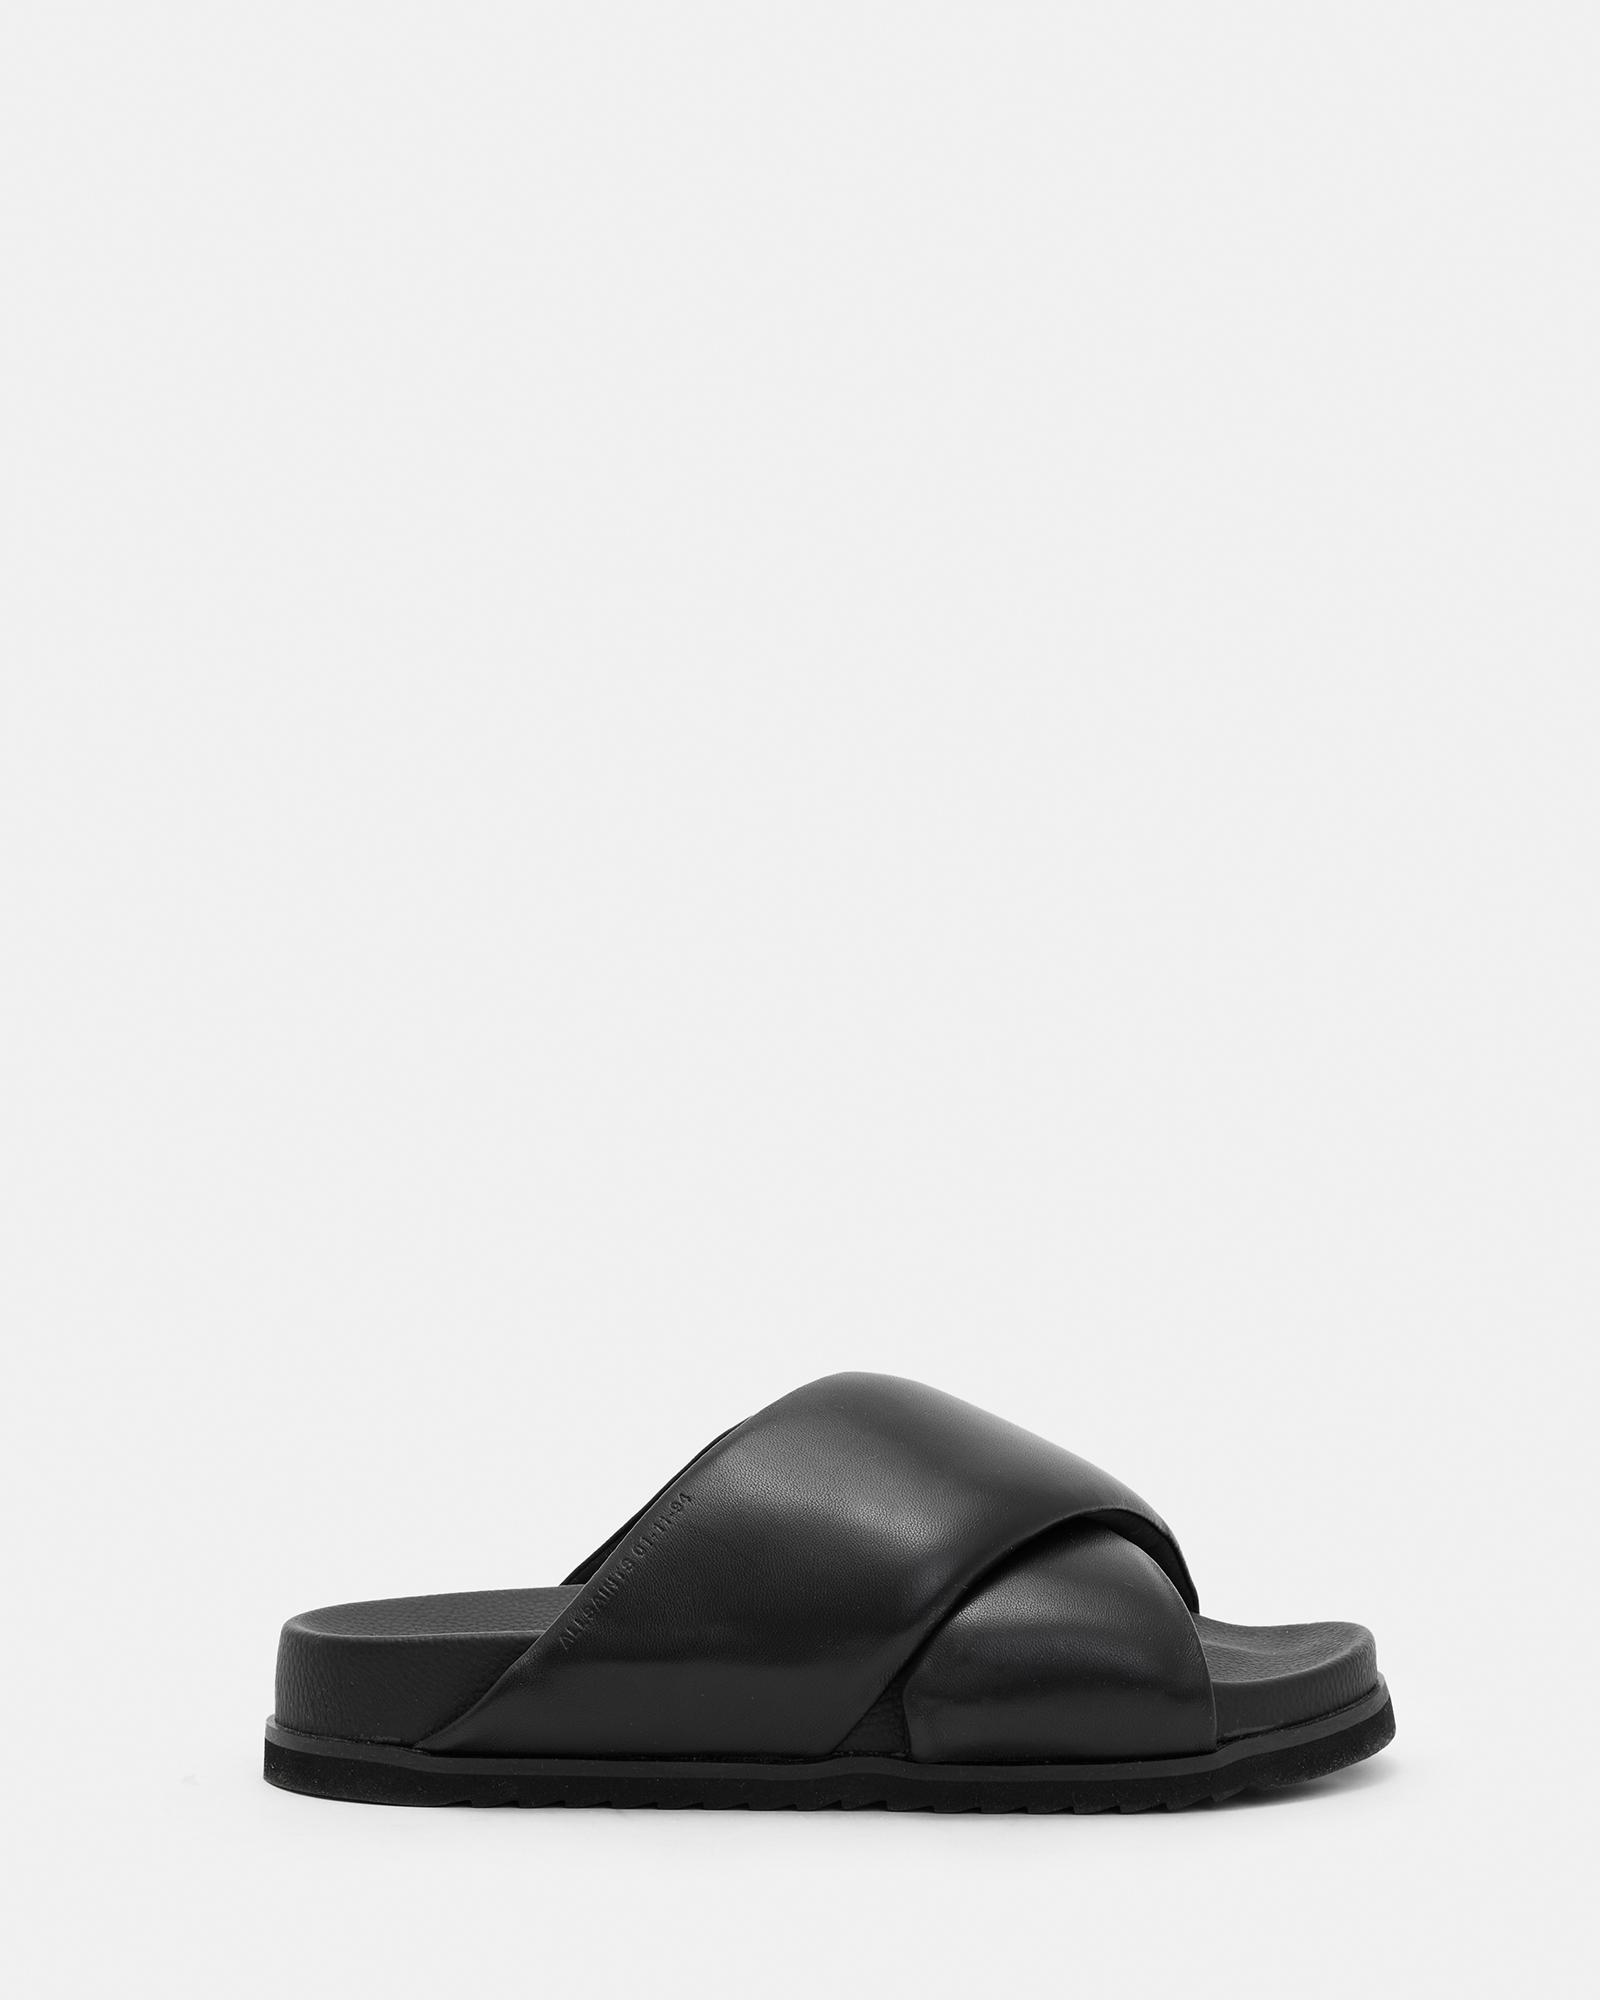 AllSaints Saki Crossover Leather Sandals,, Black